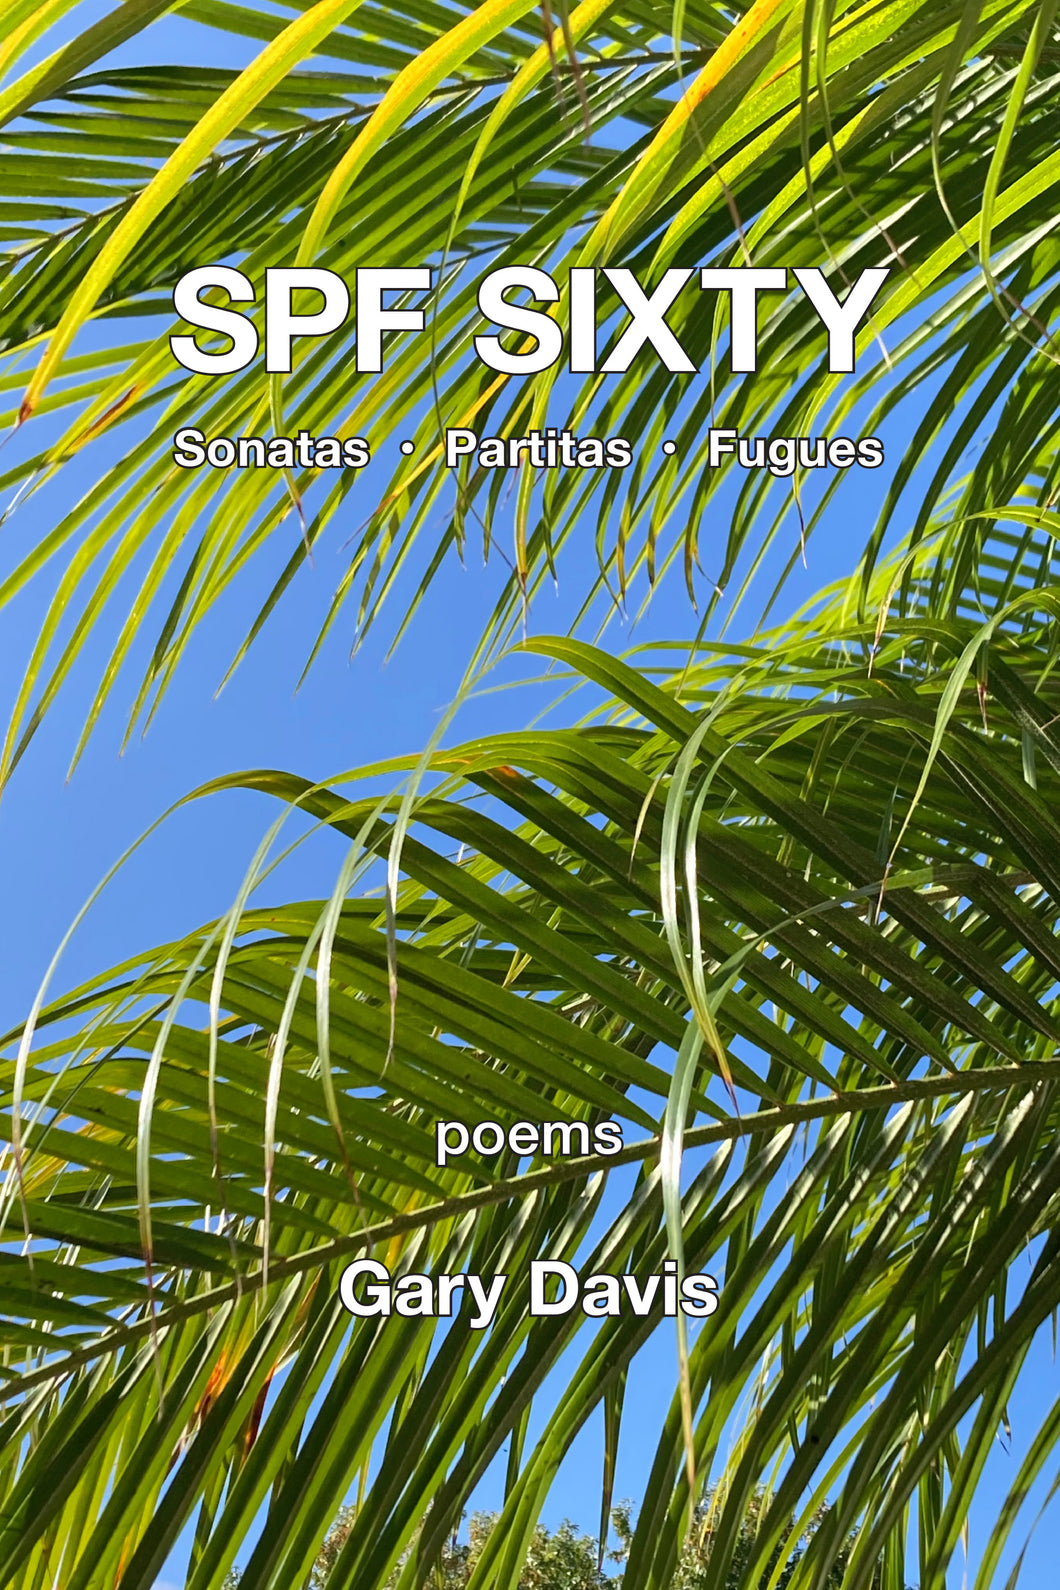 SPF SIXTY ~ Sonatas, Partitas, Fugues